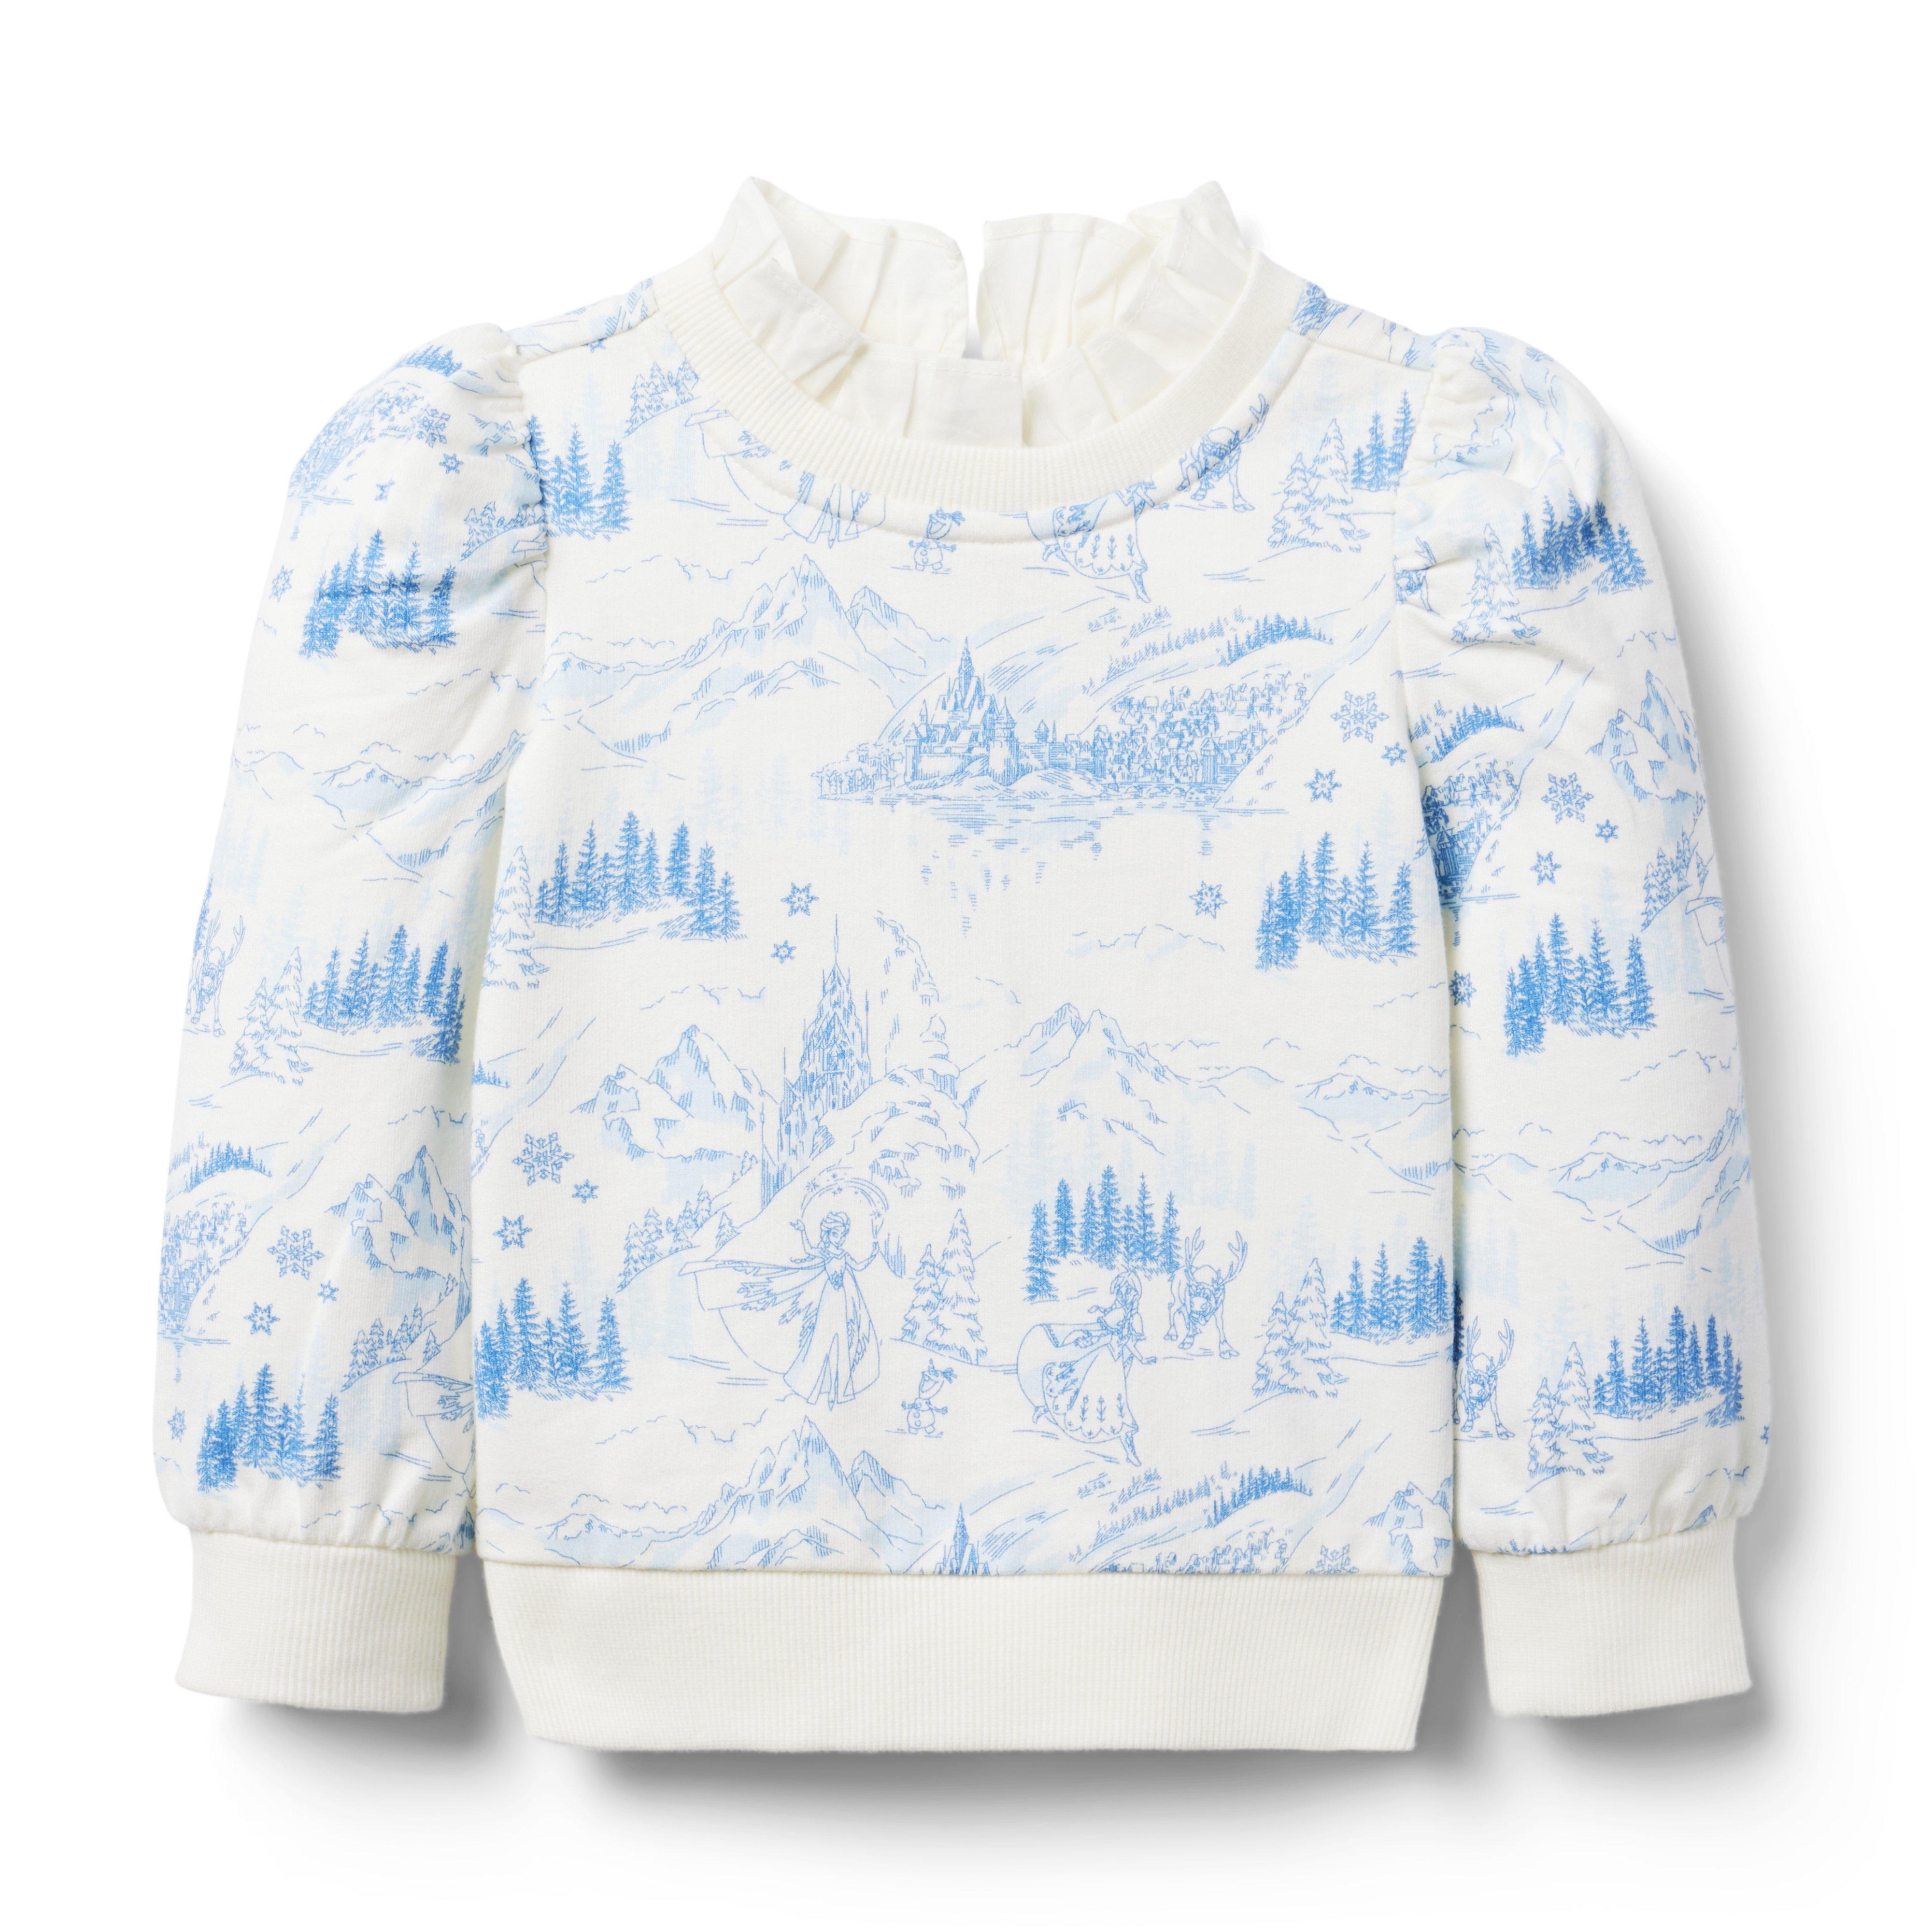 Disney Frozen Toile Sweatshirt